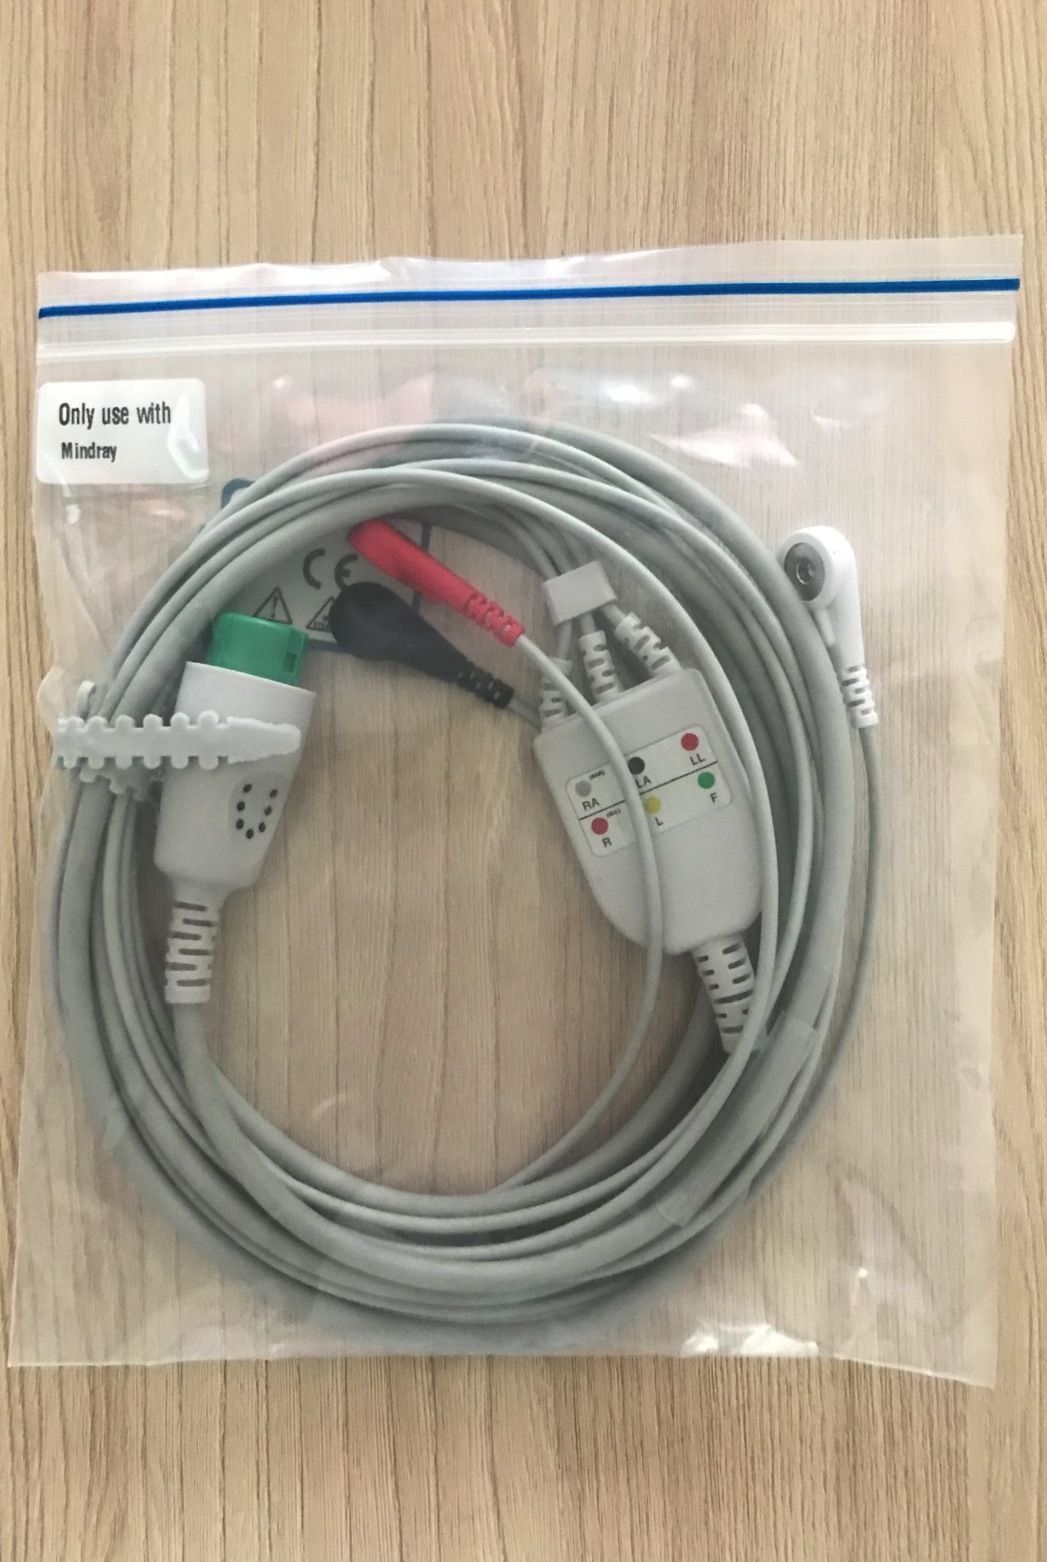 Compatible ECG 3 lead snap AHA cable for Mindray_สายอีซีจีเคเบิ้ลแบบ 3 ลีด ปลายกระดุมมาตรฐานสี AHA สำหรับเครื่องมอนิเตอร์ผู้ป่วย Mindray